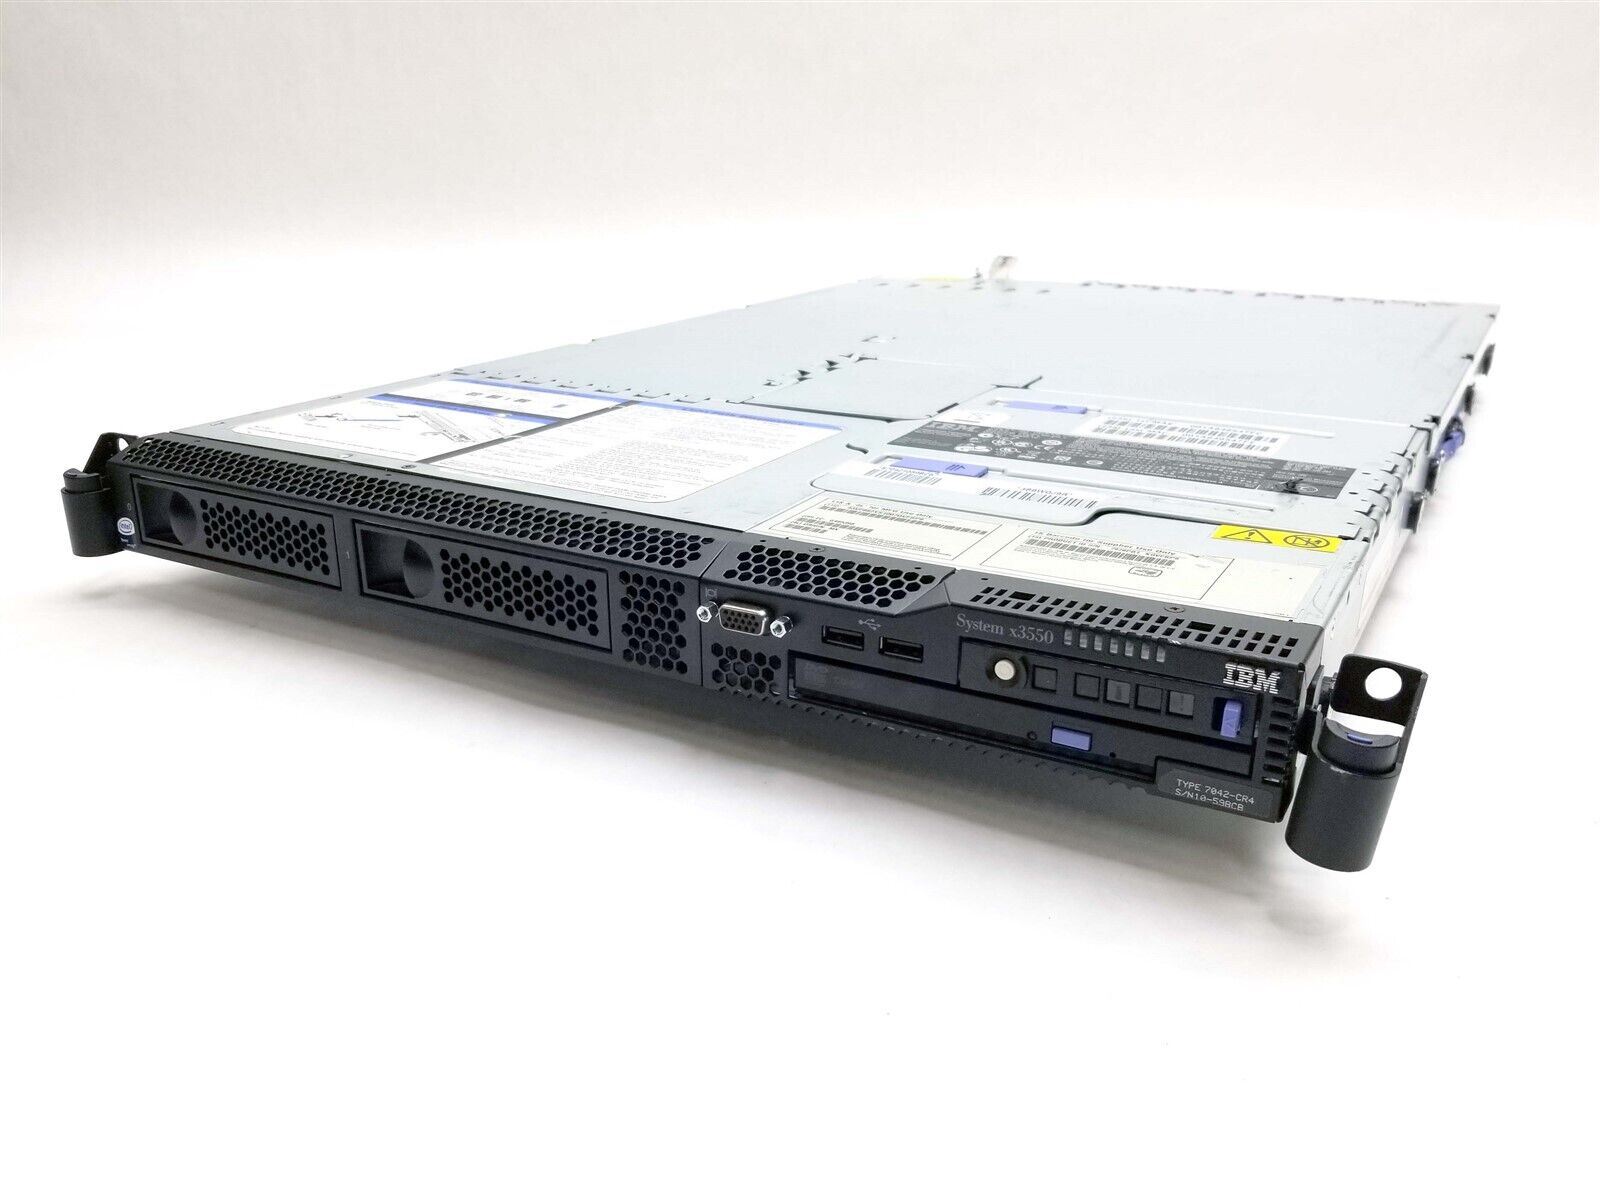 IBM x3550 7042-CR4 Server System Intel Xeon 5130 2.00Ghz DVD-Rom Drive 1GB No HD